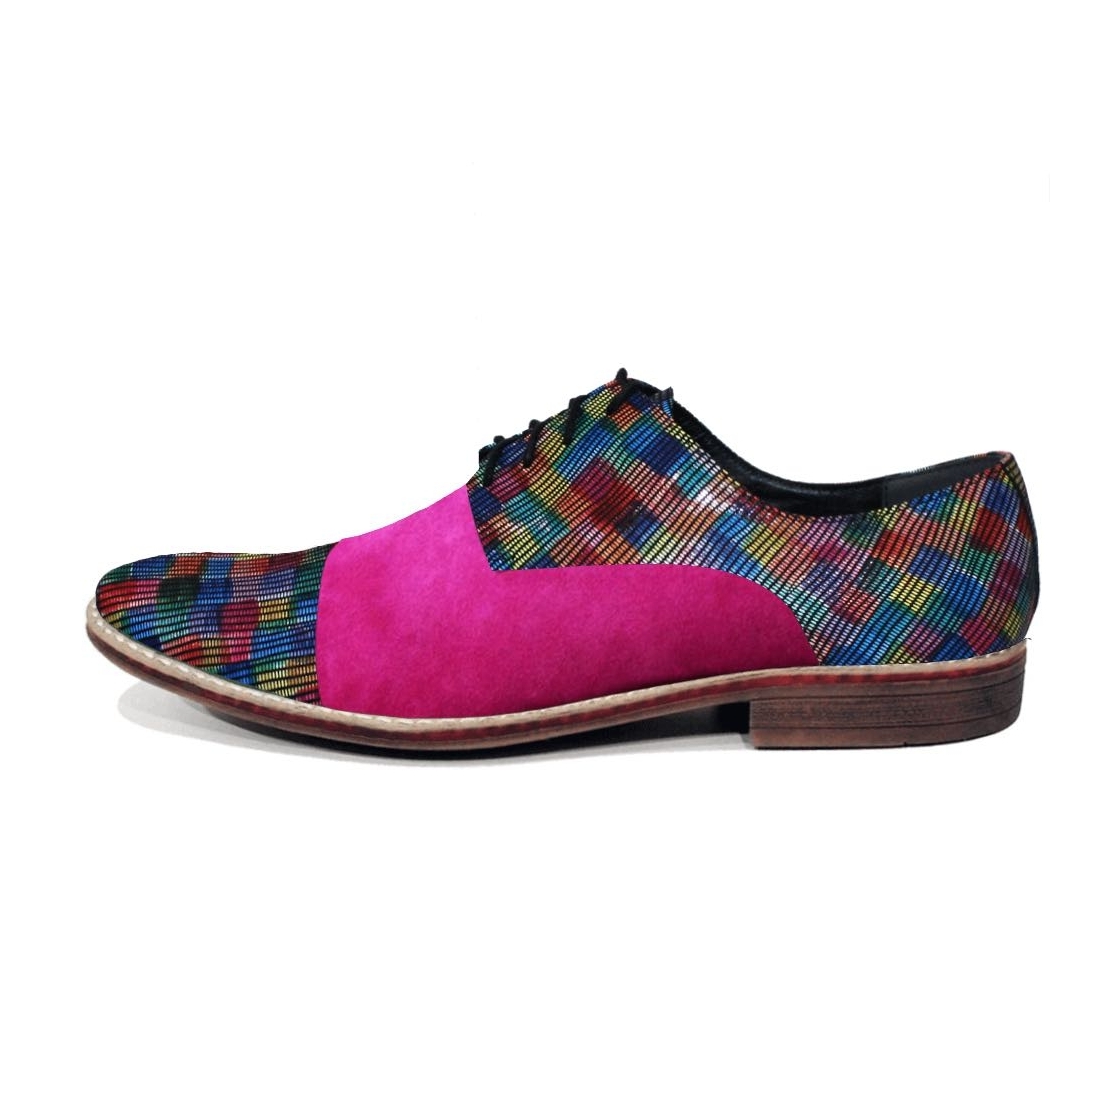 Modello Flamenico - Классическая обувь - Handmade Colorful Italian Leather Shoes